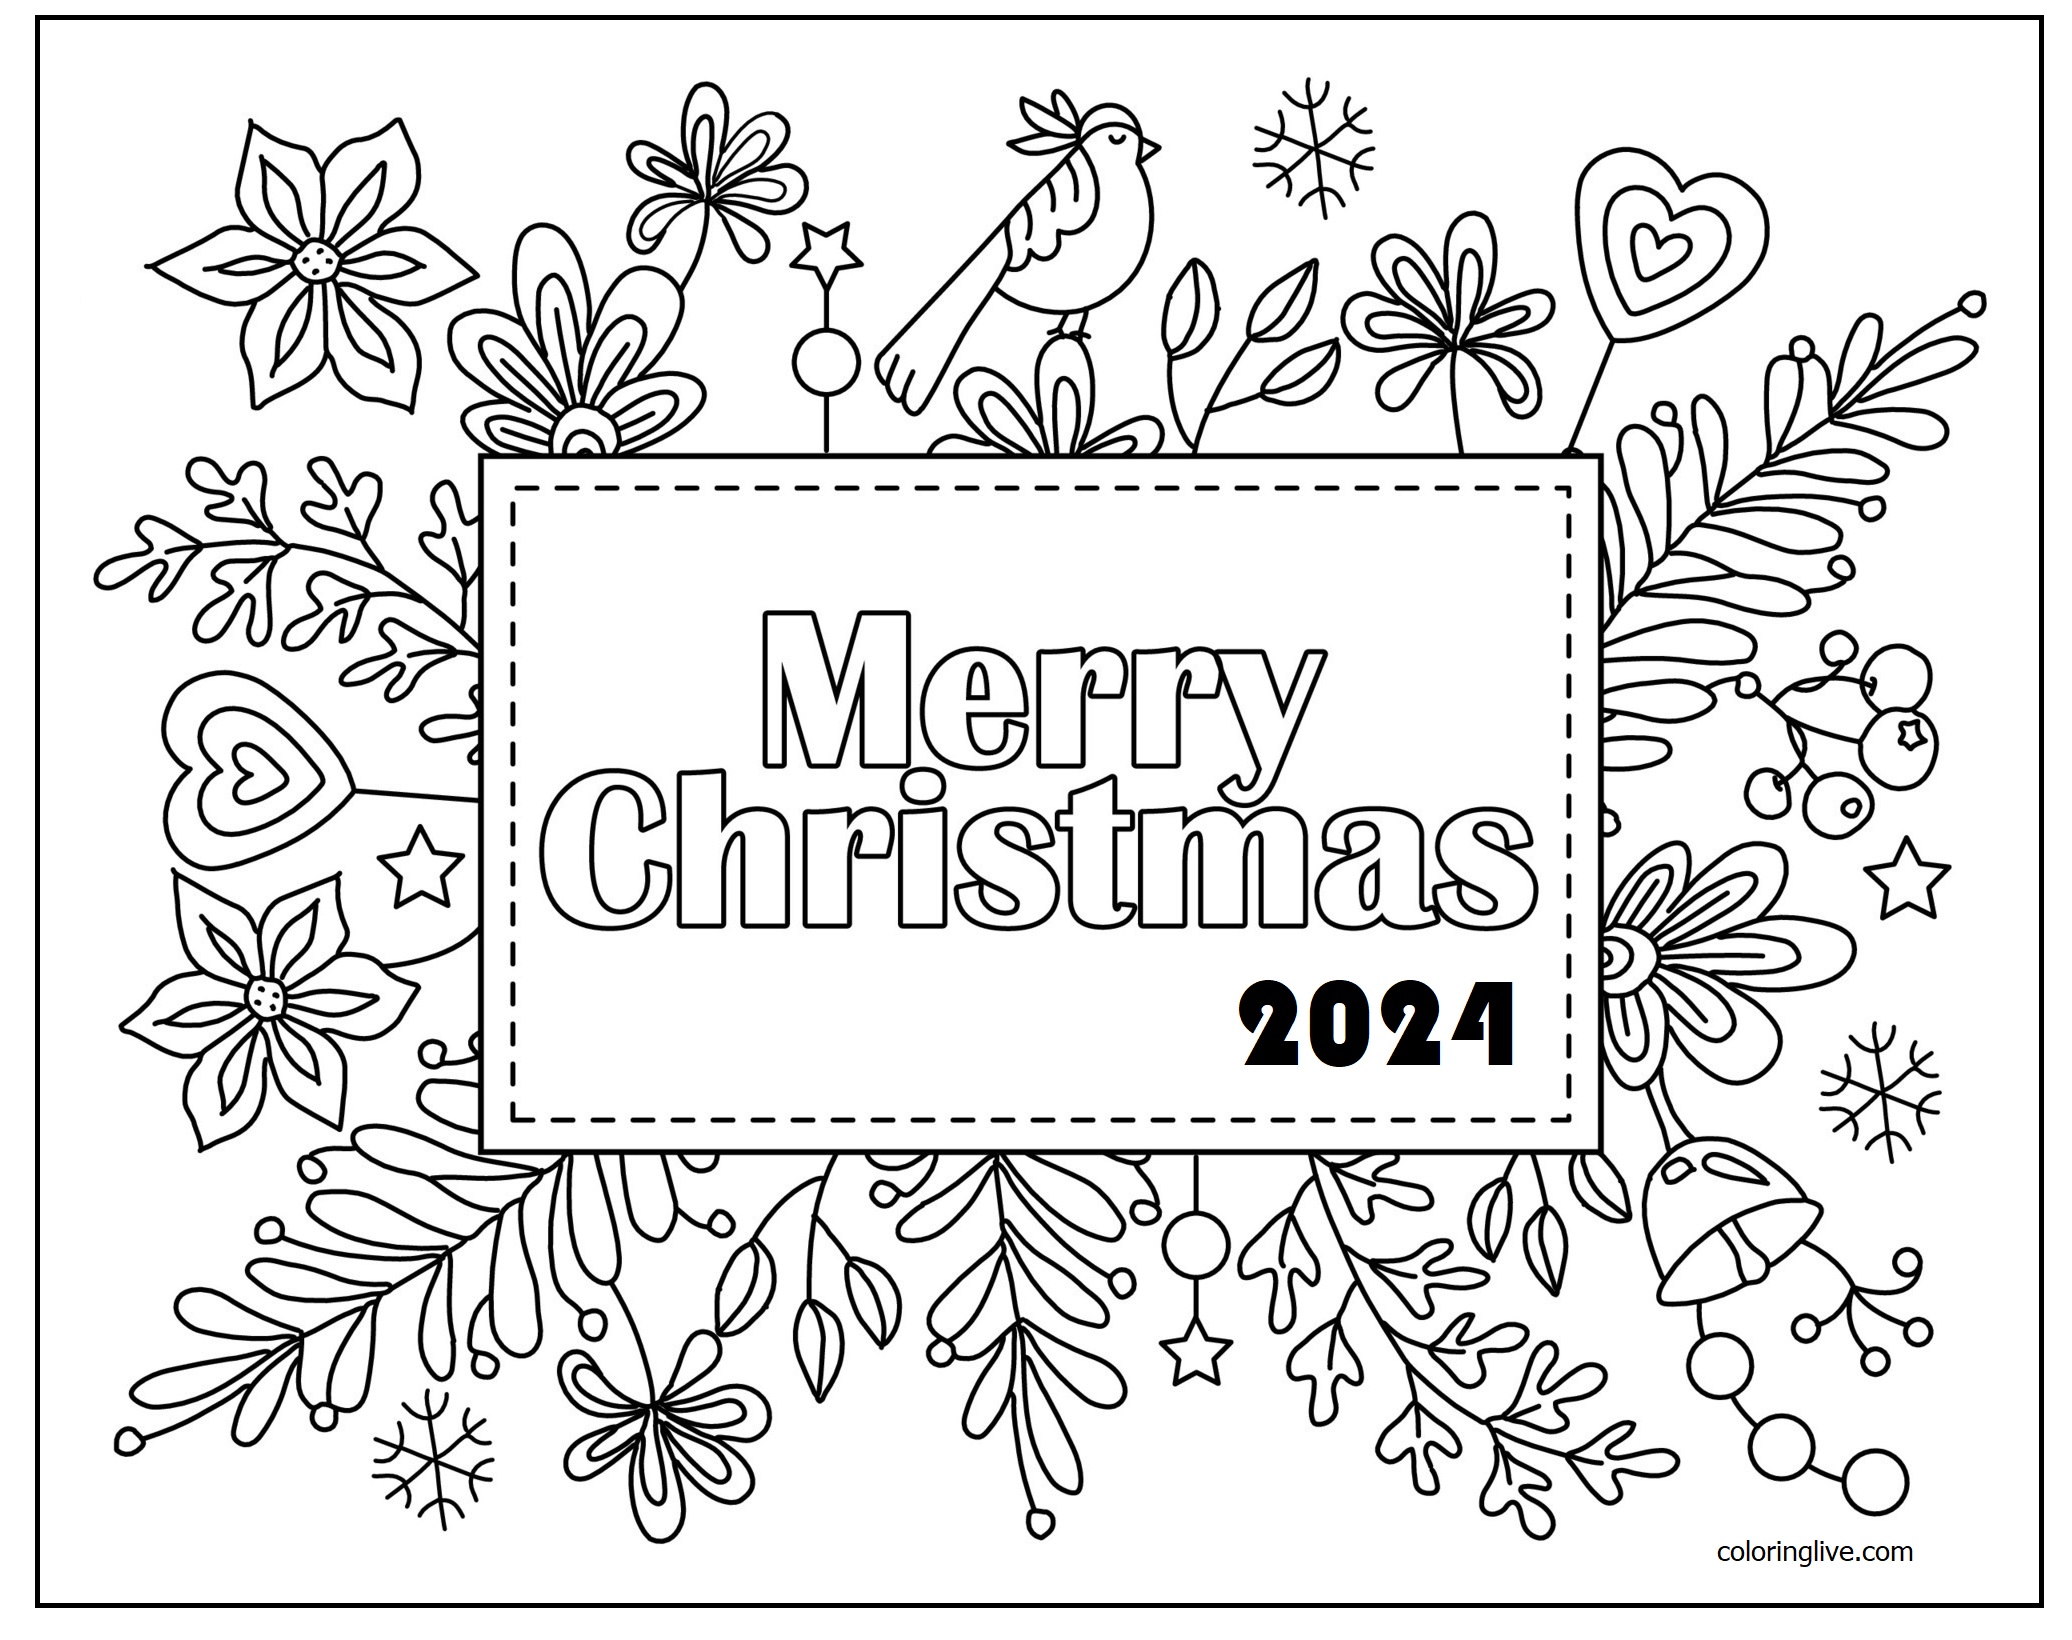 Printable Merry Christmas Holiday Greeting Coloring Page for kids.